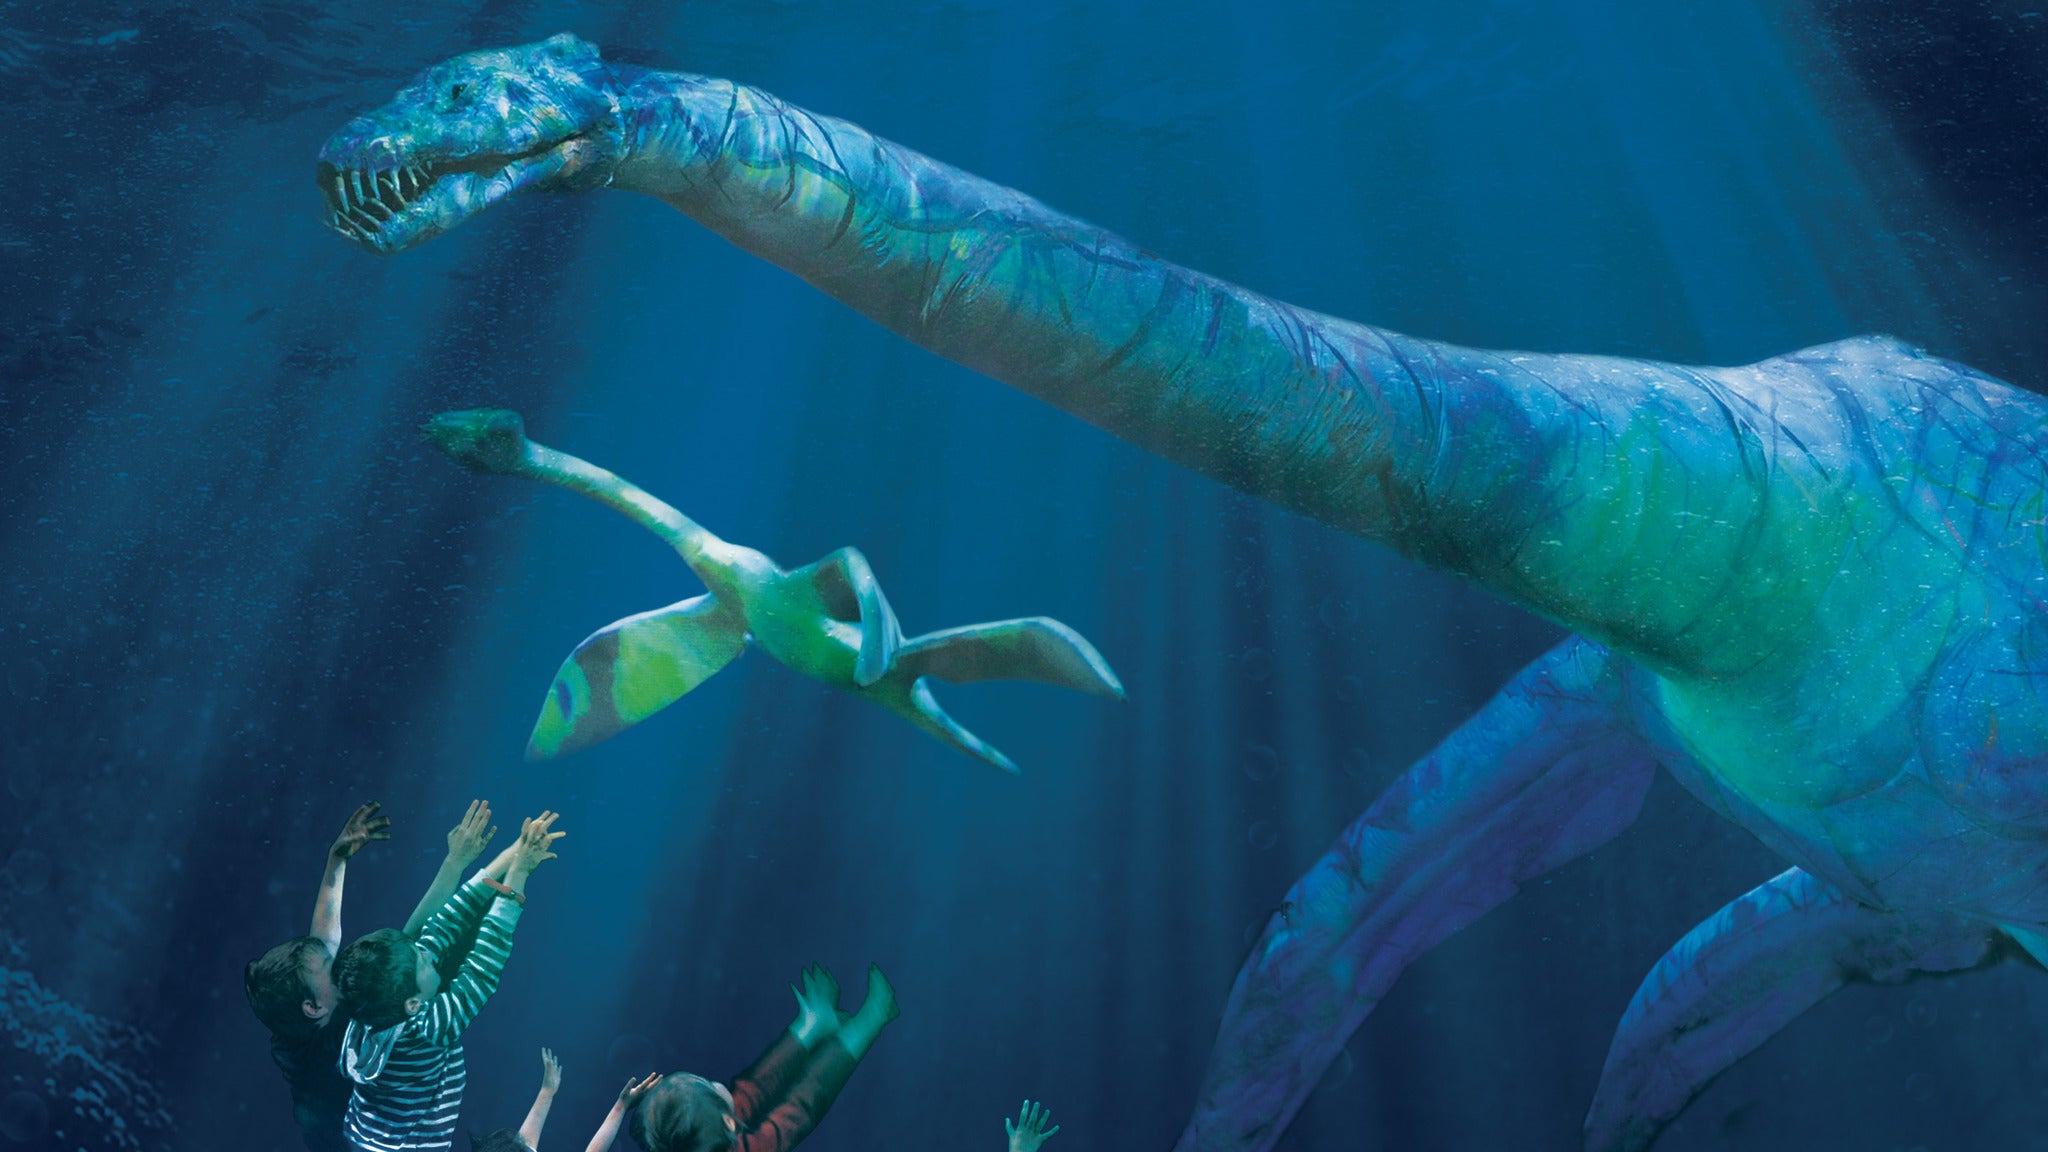 Erth's Prehistoric Aquarium Adventure in Staten Island promo photo for Member presale offer code